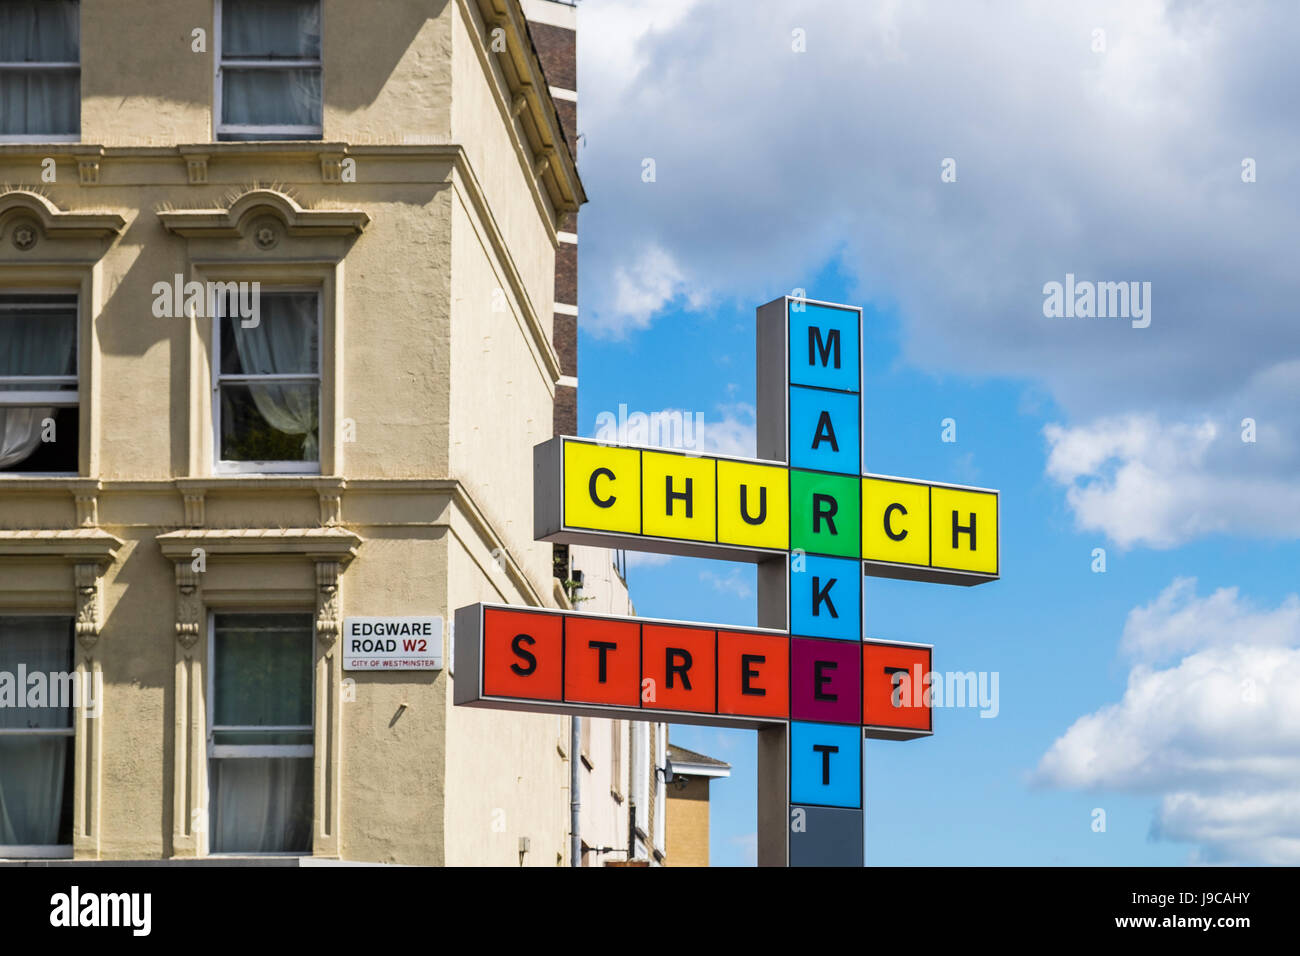 Church Street Market sign on Edgware road, London, England, U.K. Stock Photo